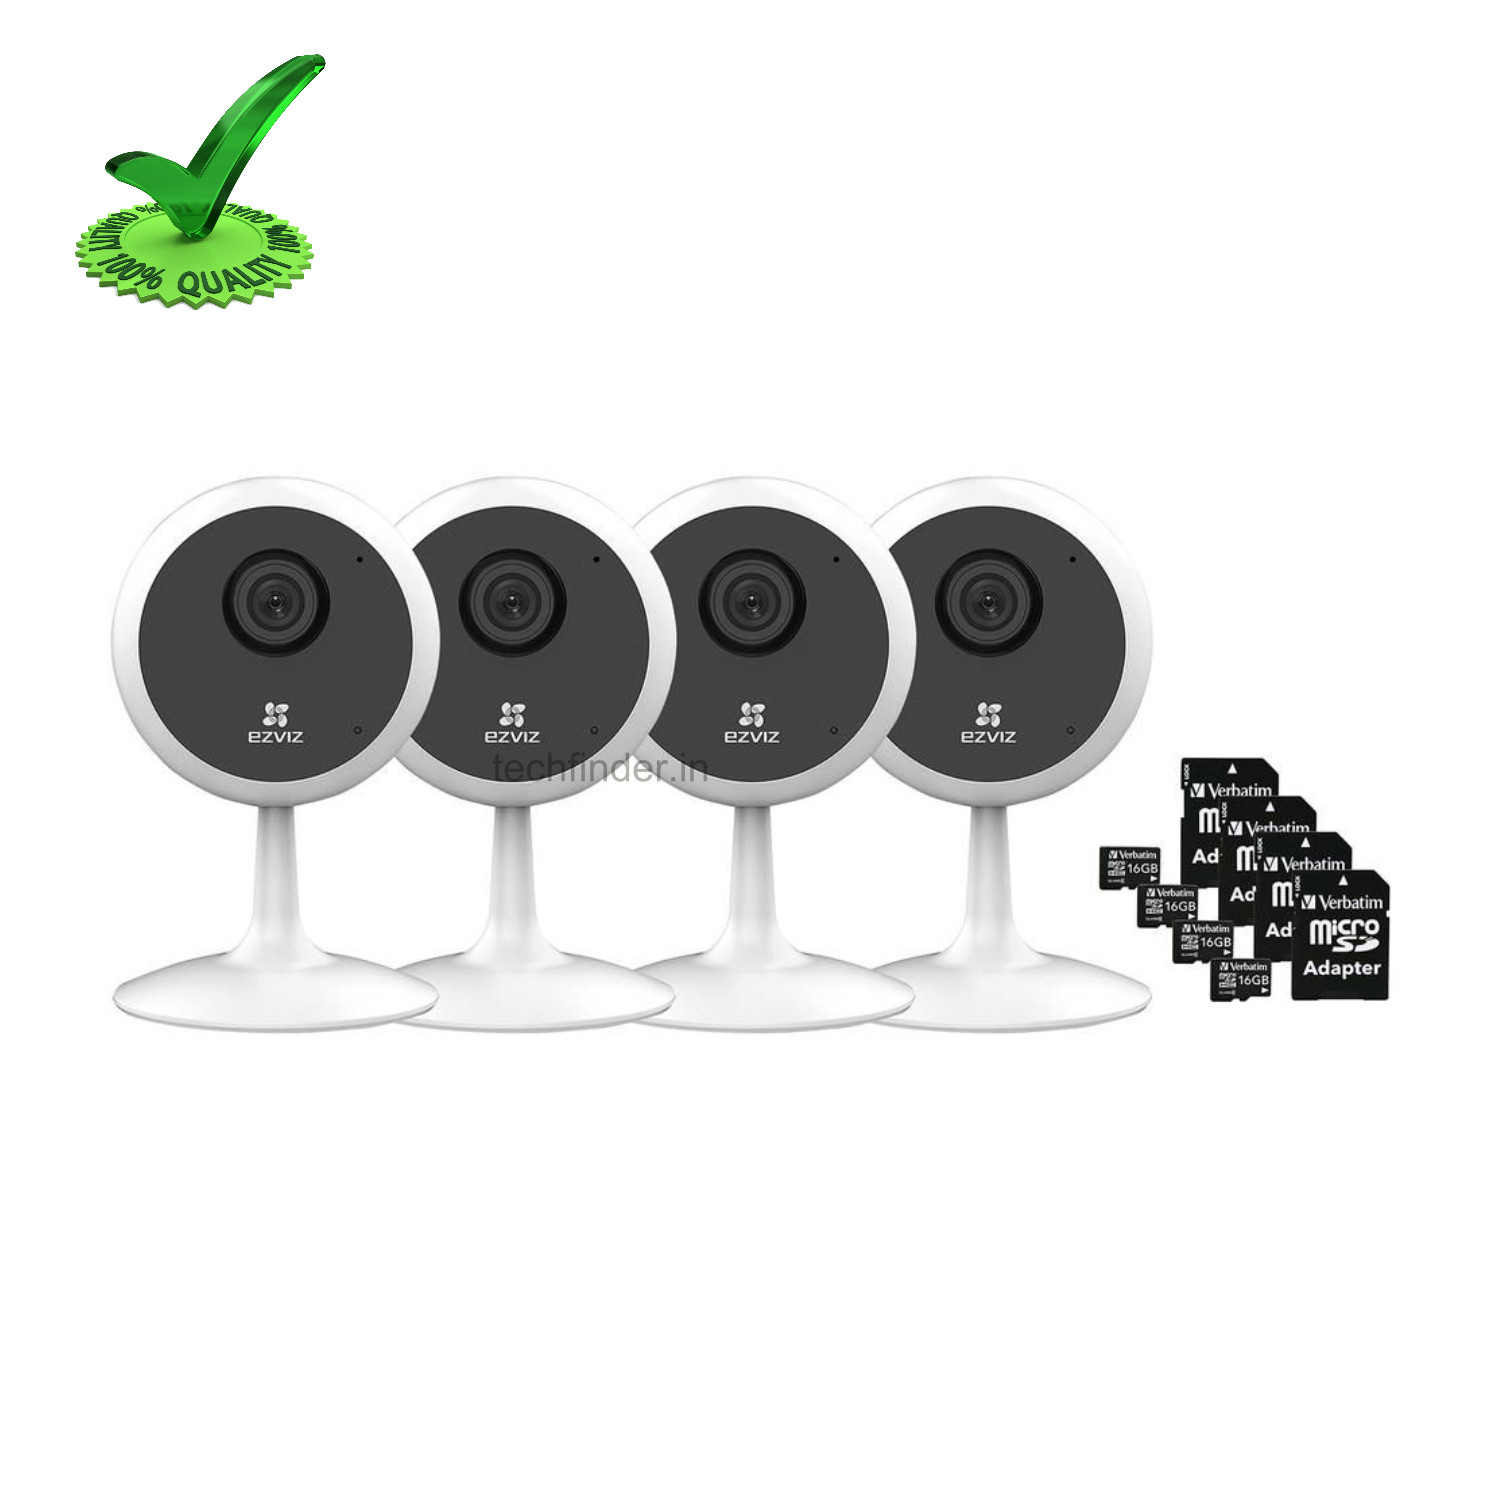 Ezviz C1C 720p Vision HD Resolution Indoor Wi-Fi Camera